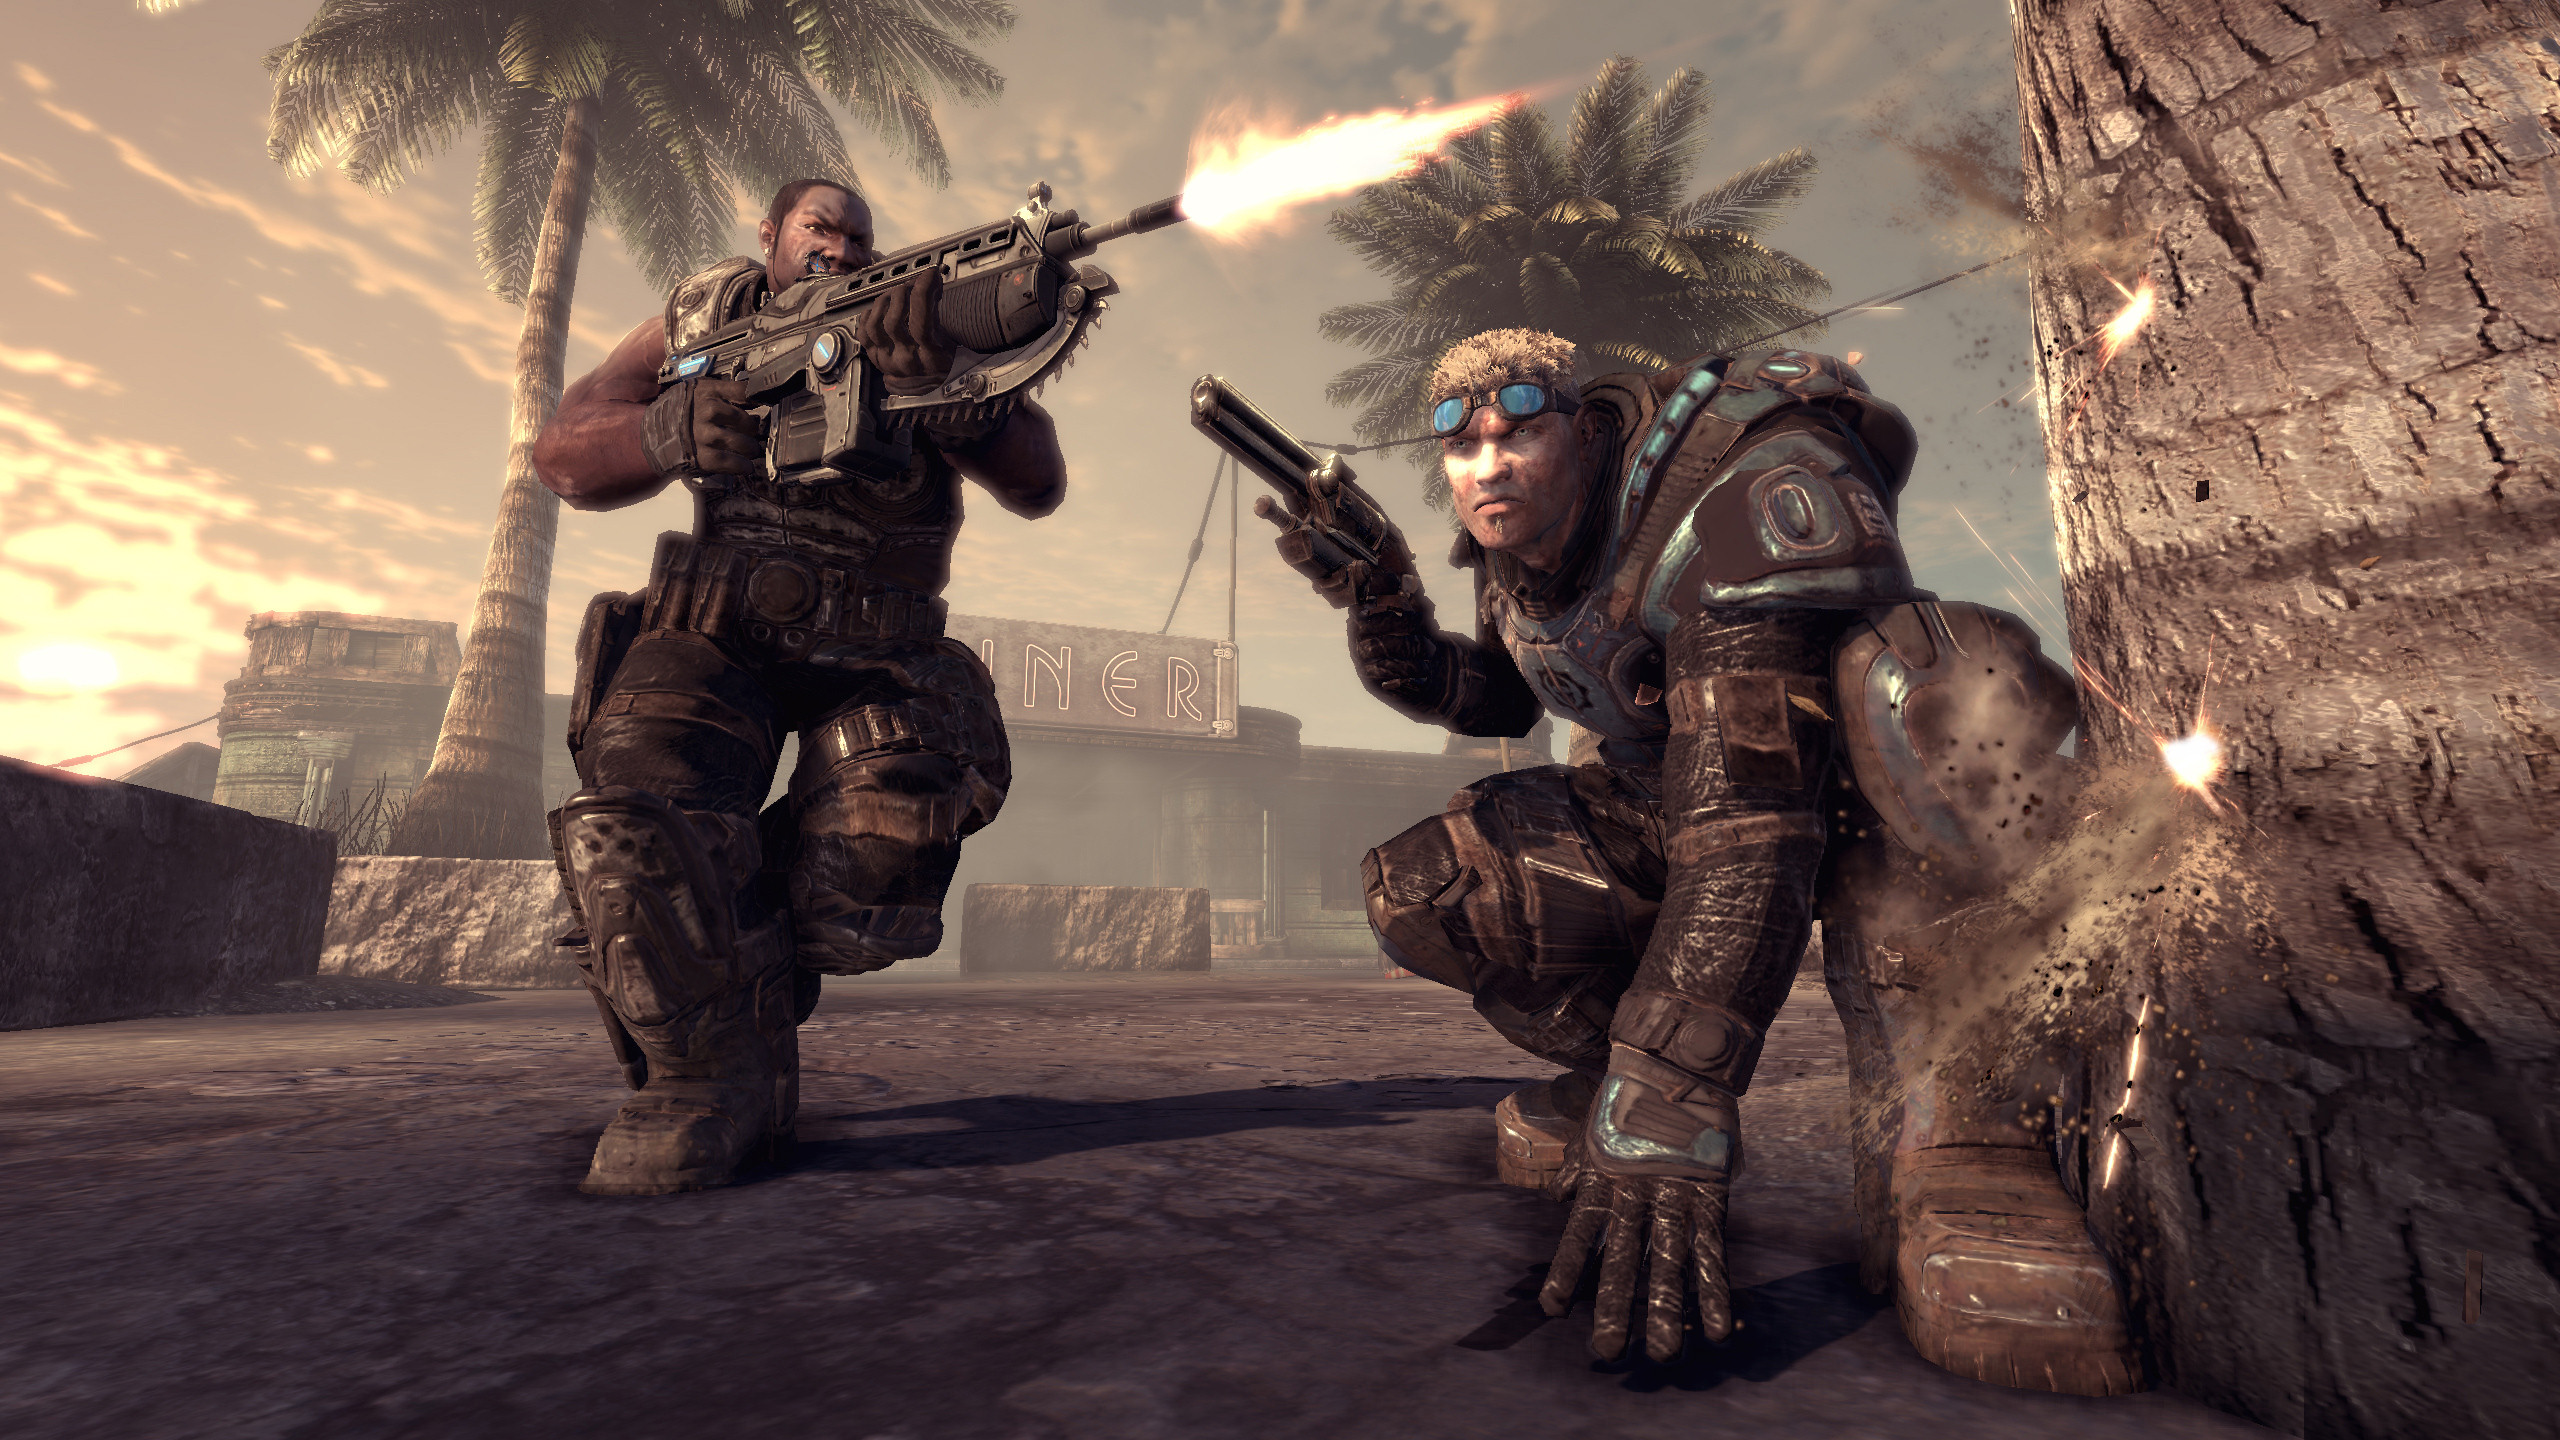 Gears of War 2 is released